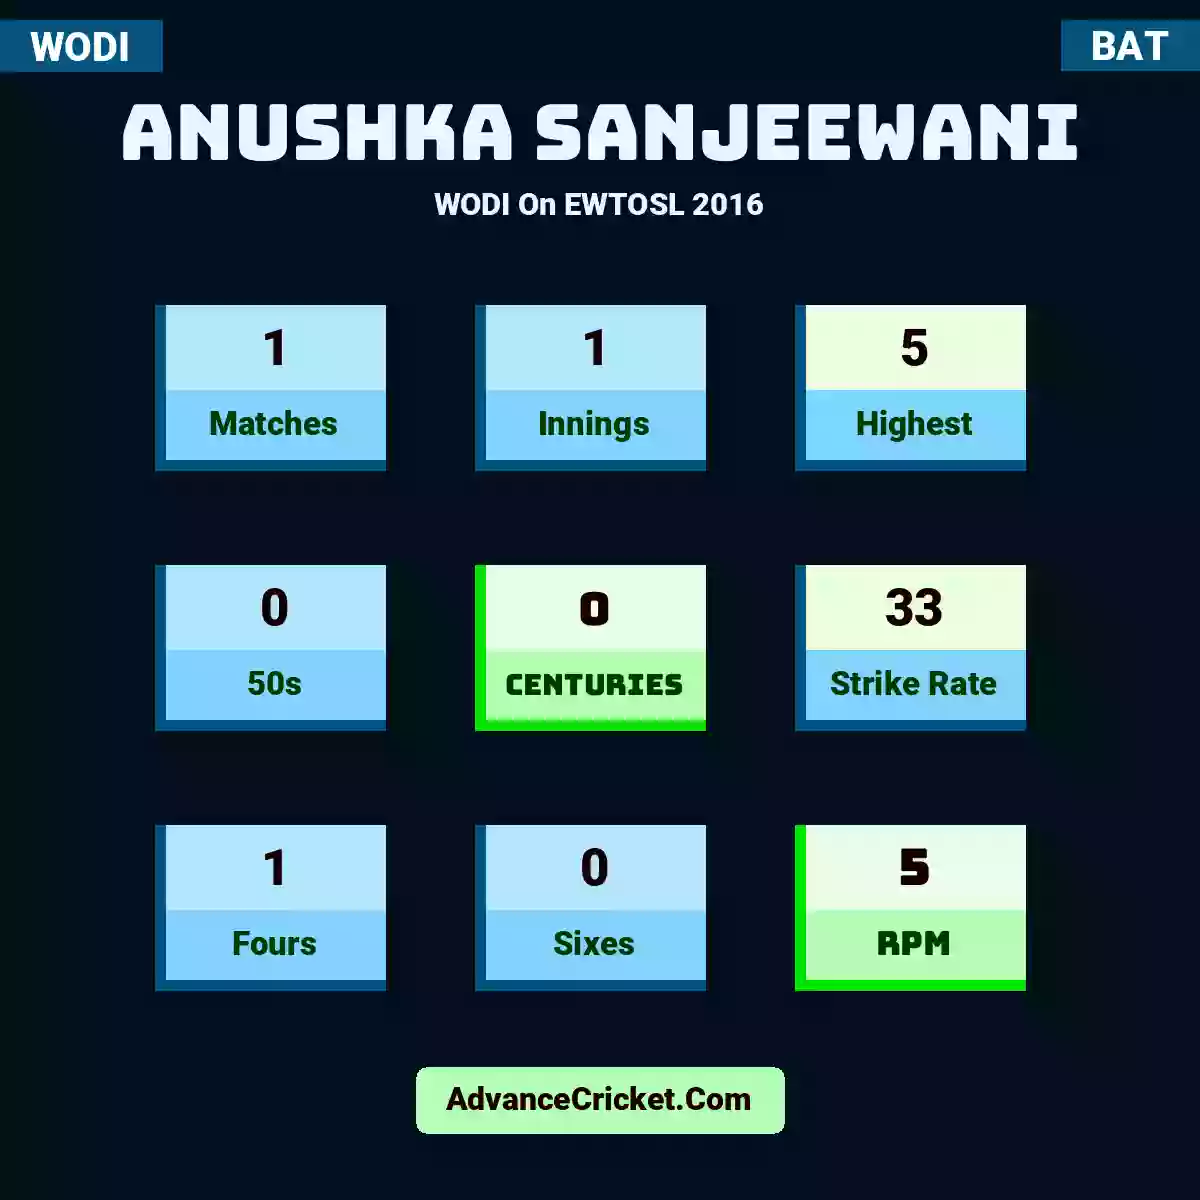 Anushka Sanjeewani WODI  On EWTOSL 2016, Anushka Sanjeewani played 1 matches, scored 5 runs as highest, 0 half-centuries, and 0 centuries, with a strike rate of 33. A.Sanjeewani hit 1 fours and 0 sixes, with an RPM of 5.